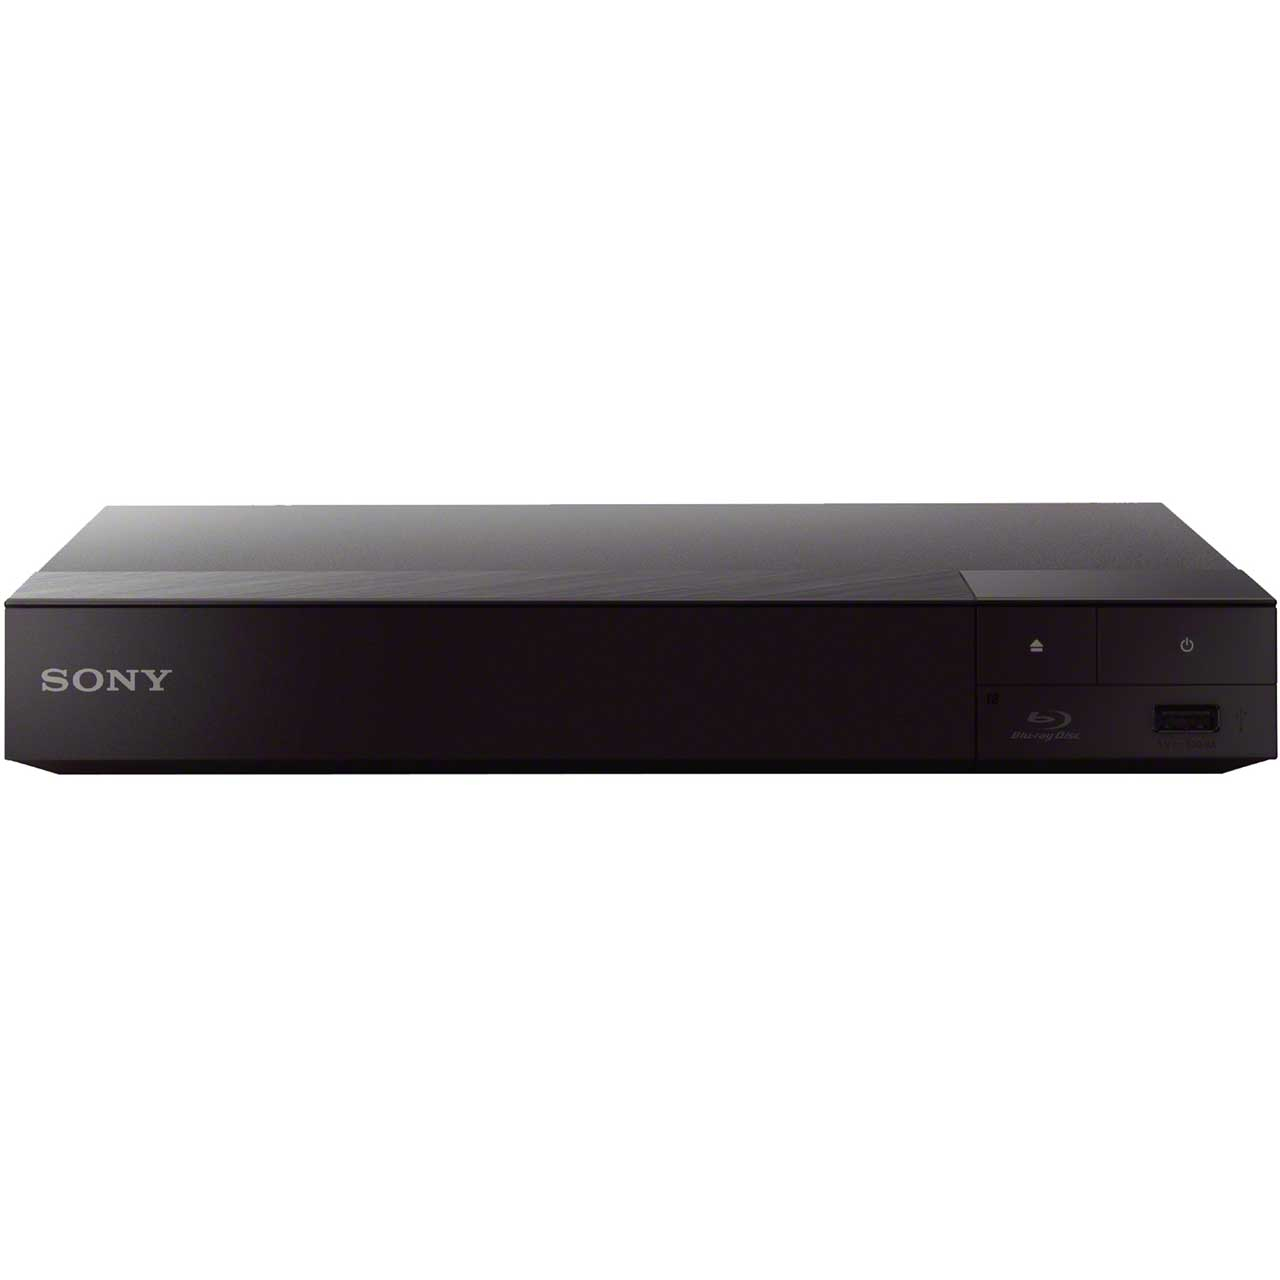 Bluray player Sony BDP-S6700B Blu-ray player black